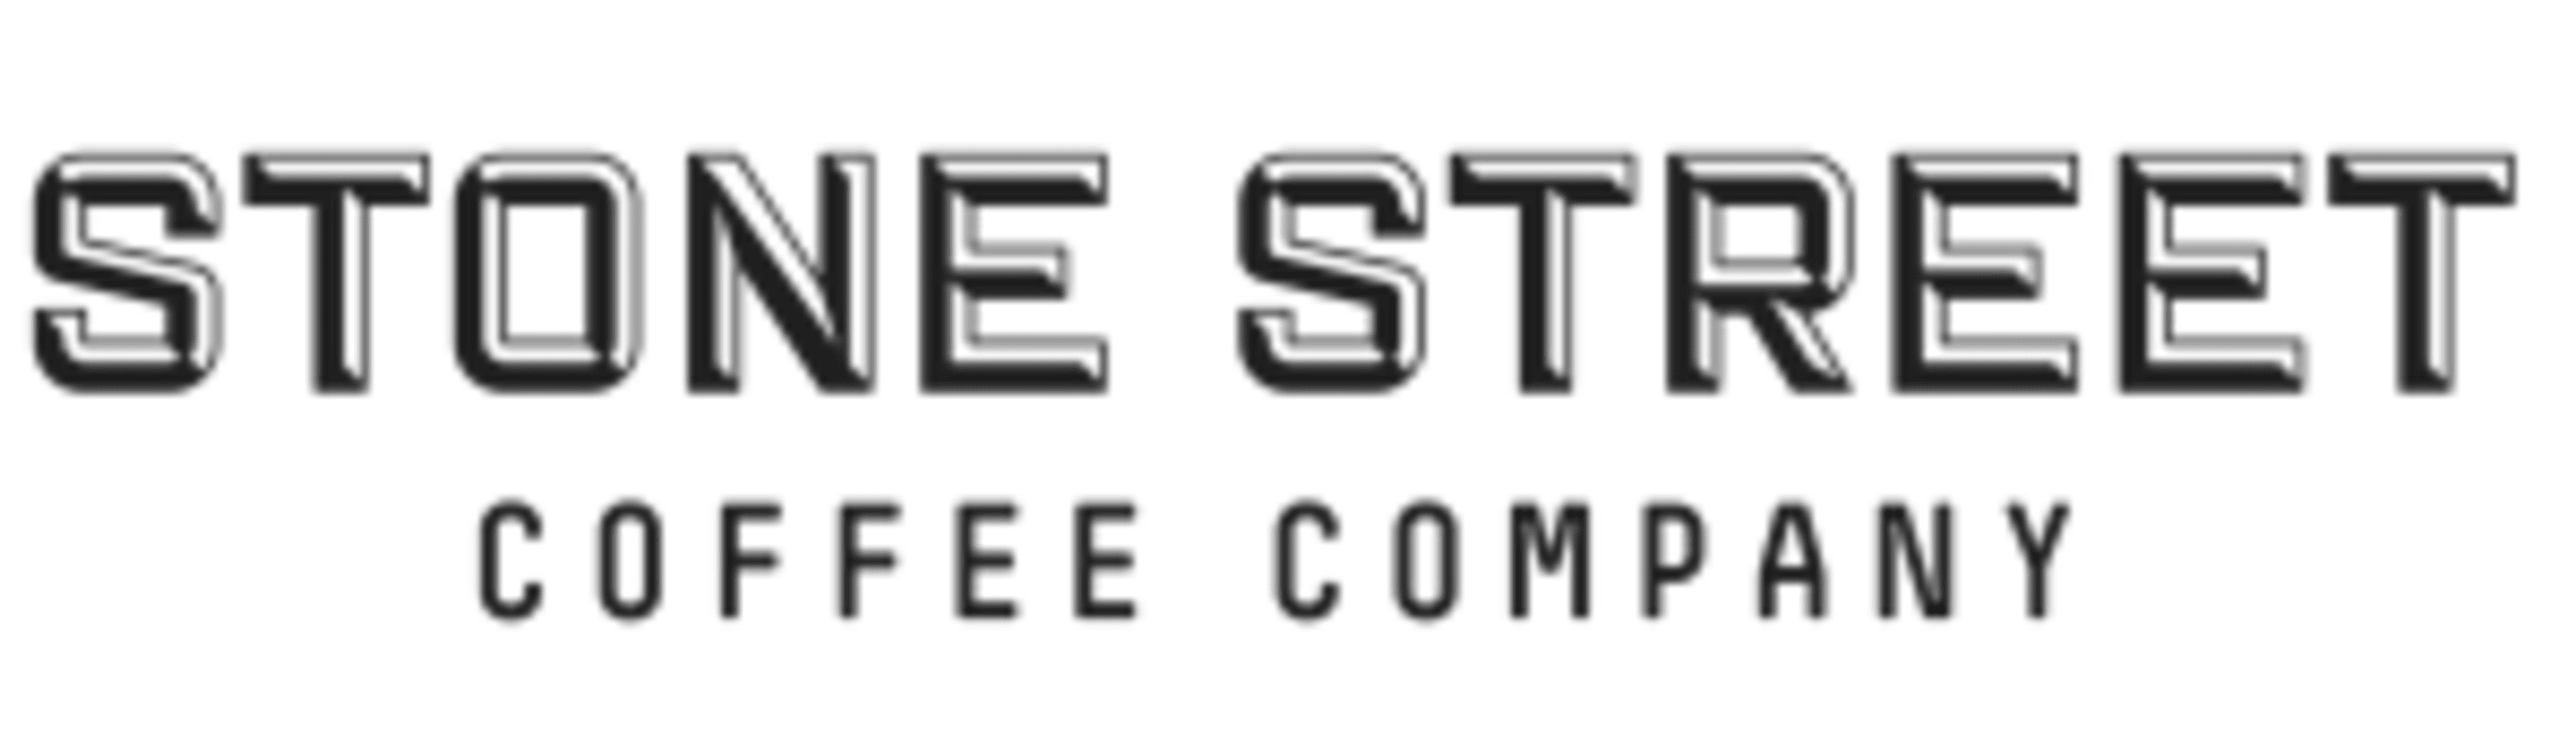 Stone Street Coffee Code